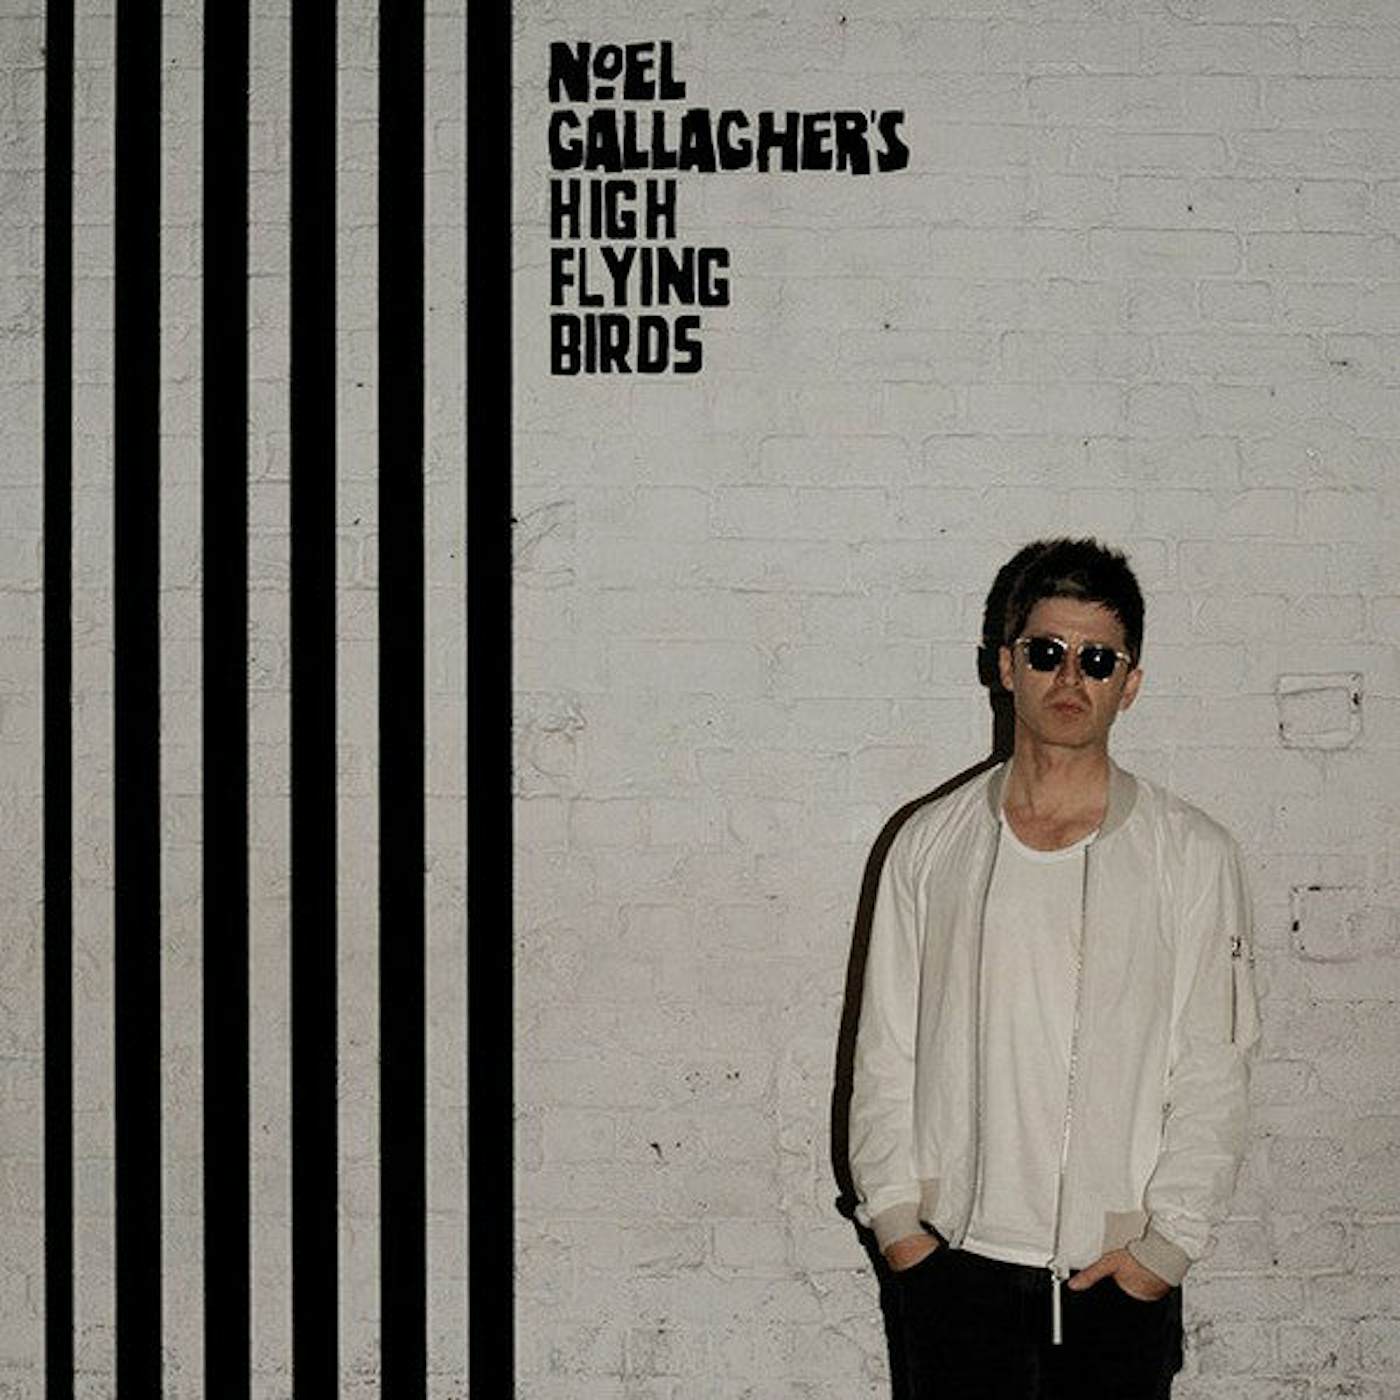 Noel Gallagher's High Flying Birds LP Vinyl Record - Chasing Yesterday